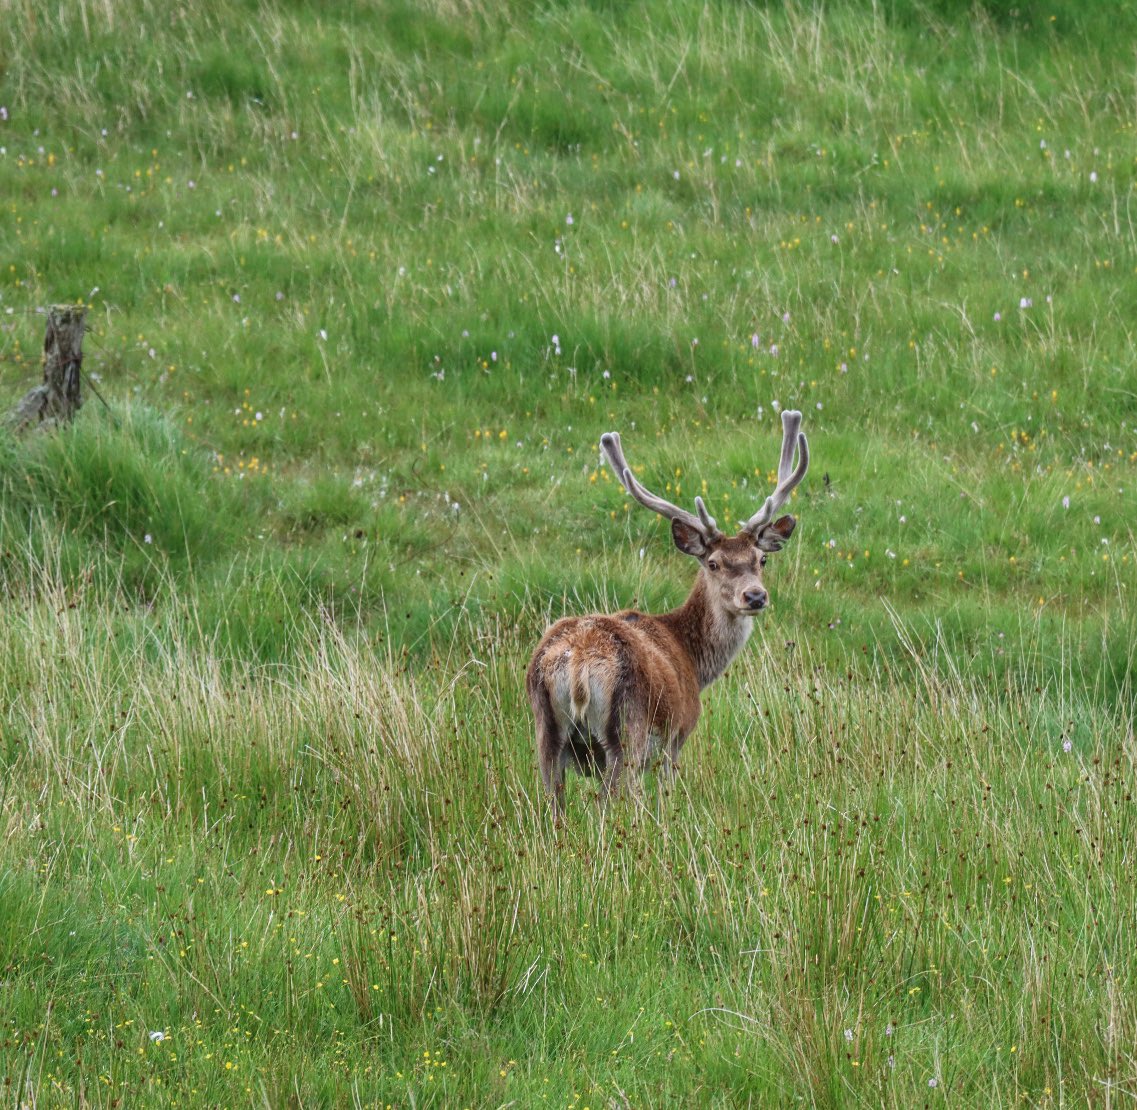 Made a new friend whilst walking on the Kingairloch Estate near Loch a'Choire . 

#stag #wildlife #wildlifephotography #WildlifeWednesday #animals #nature #naturalworld #scotland #highlands #photo #photograghy #photographer